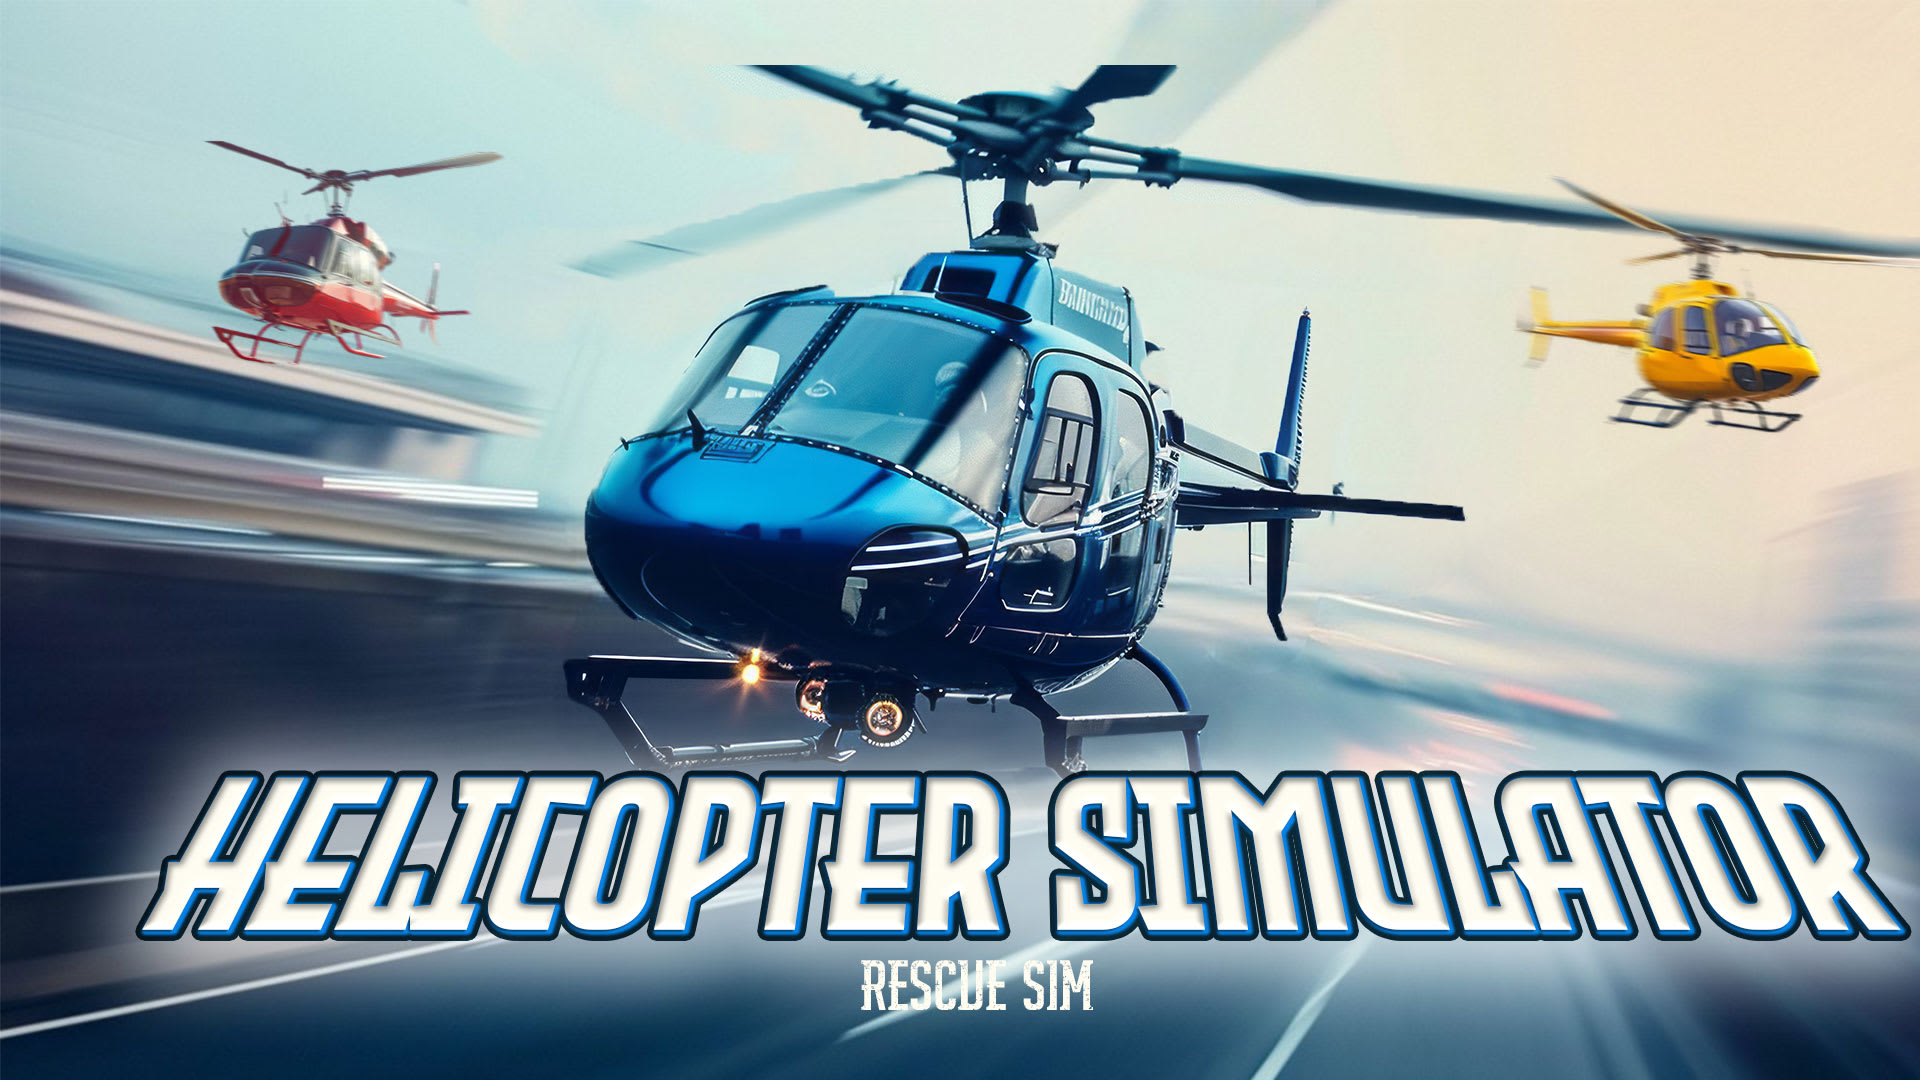 Helicopter Simulator : RESCUE SIM 1